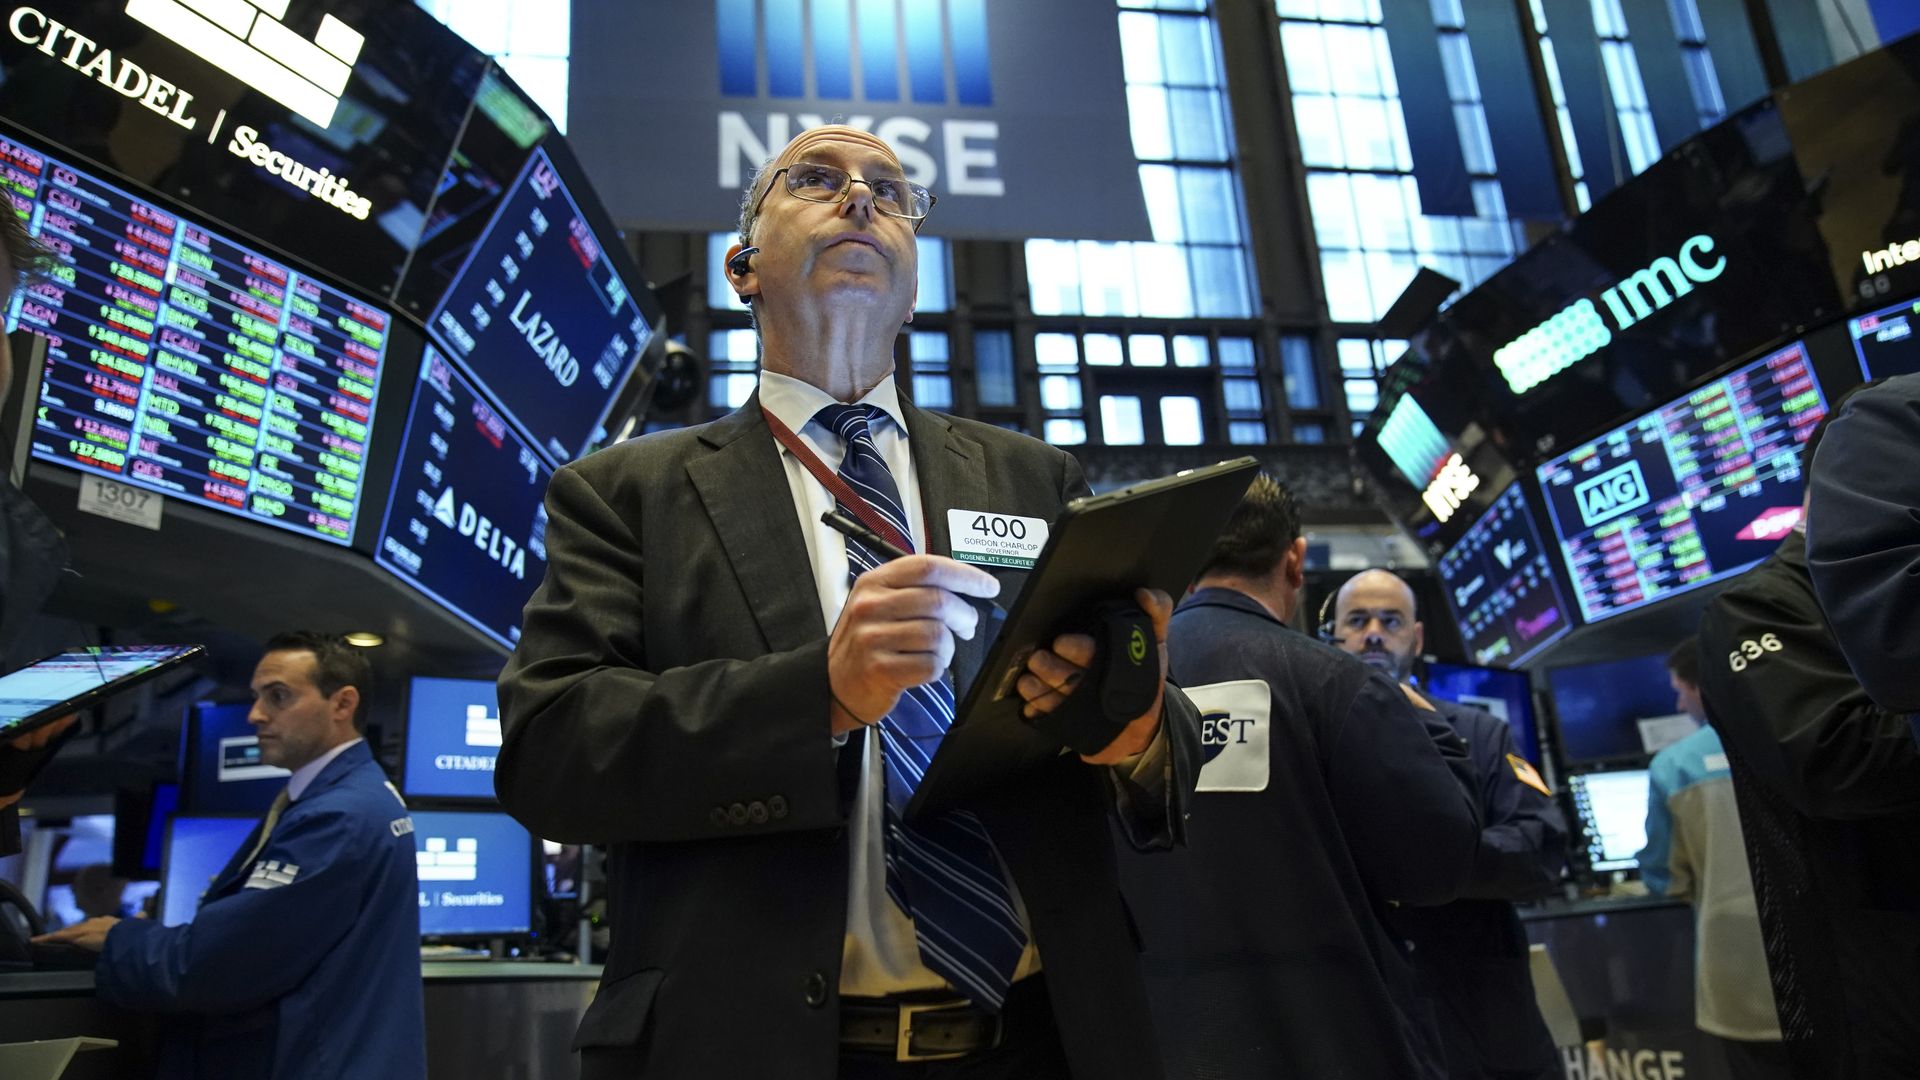 The floor of the New York Stock Exchange last month